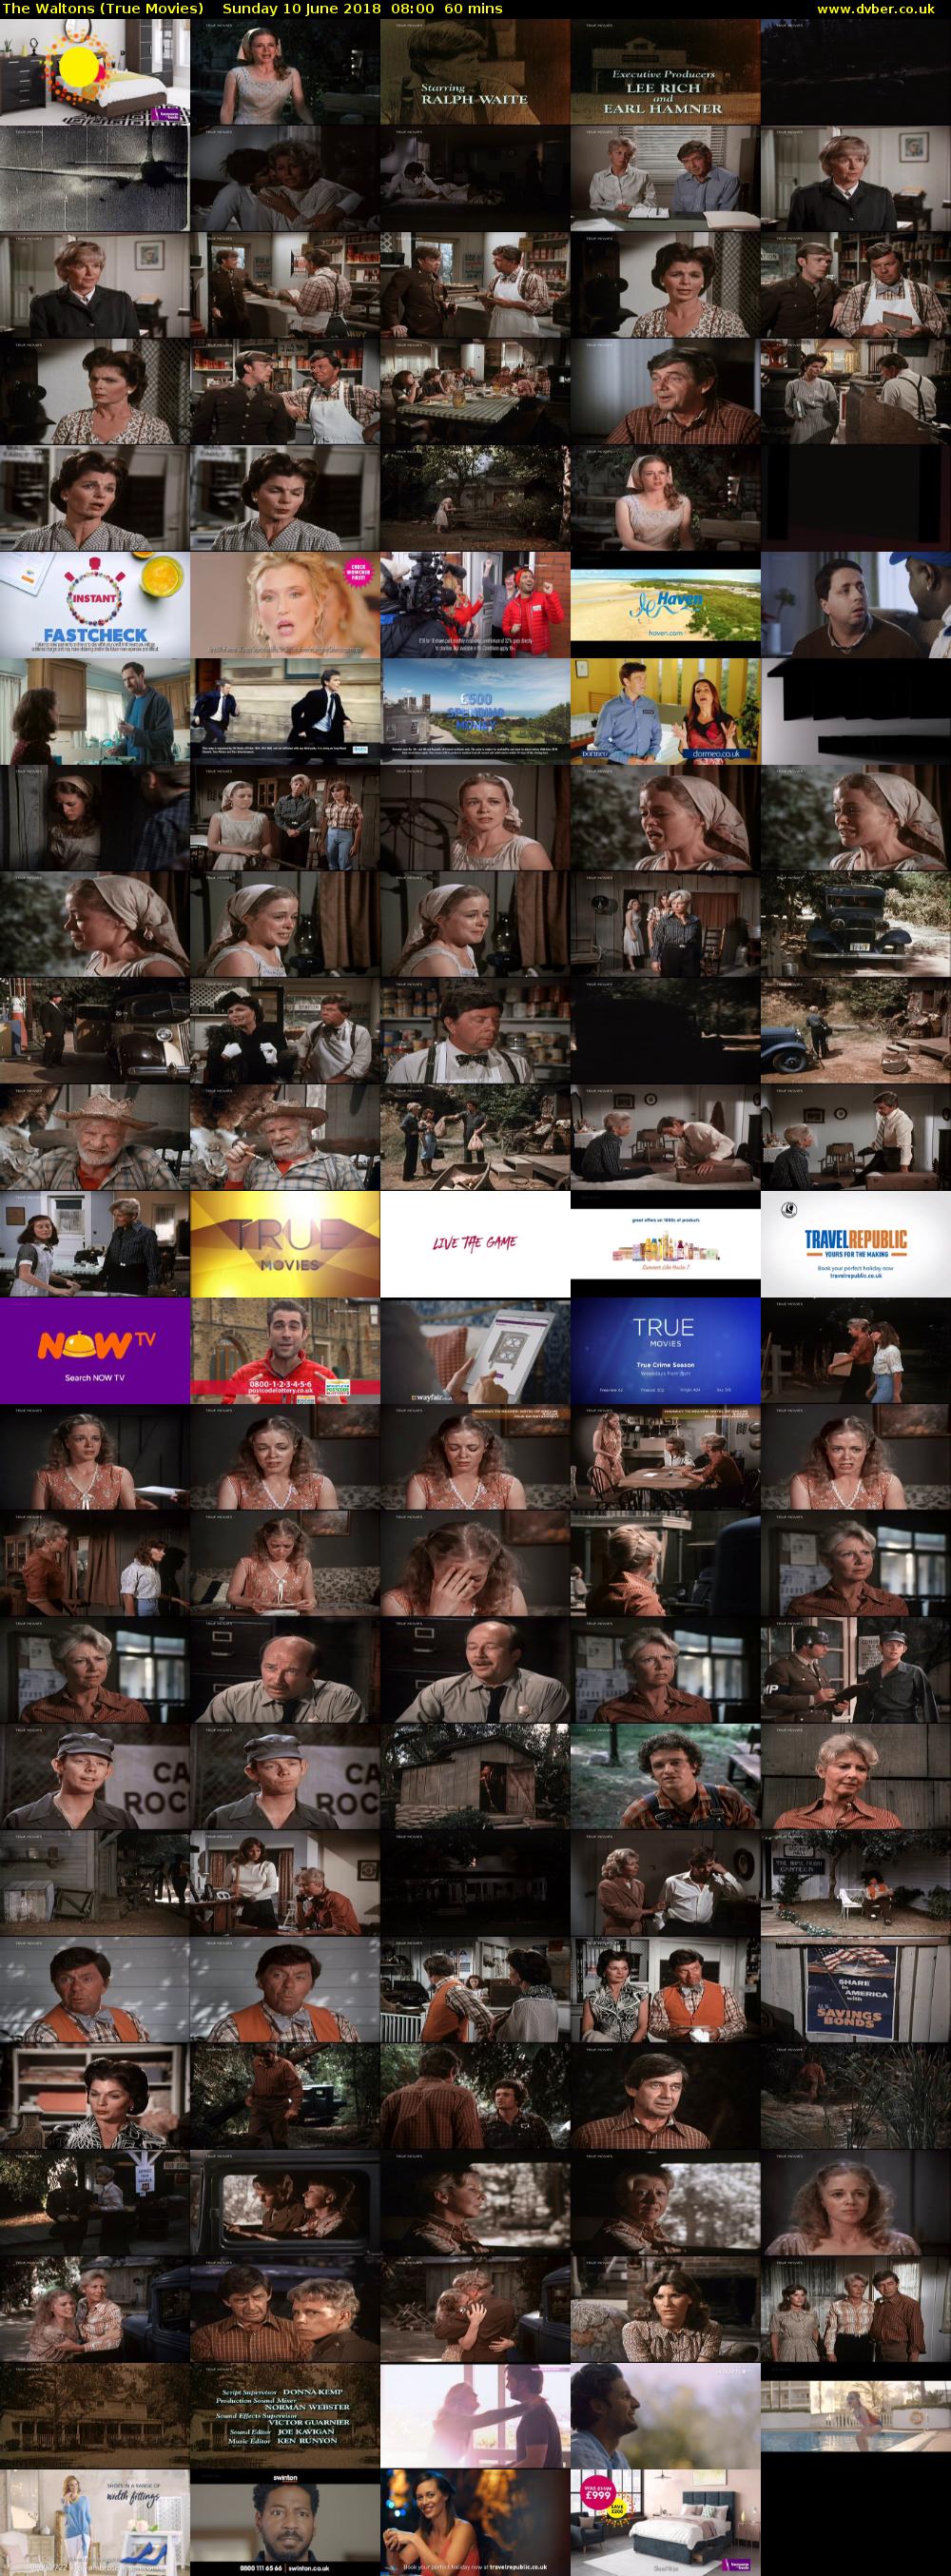 The Waltons (True Movies) Sunday 10 June 2018 08:00 - 09:00